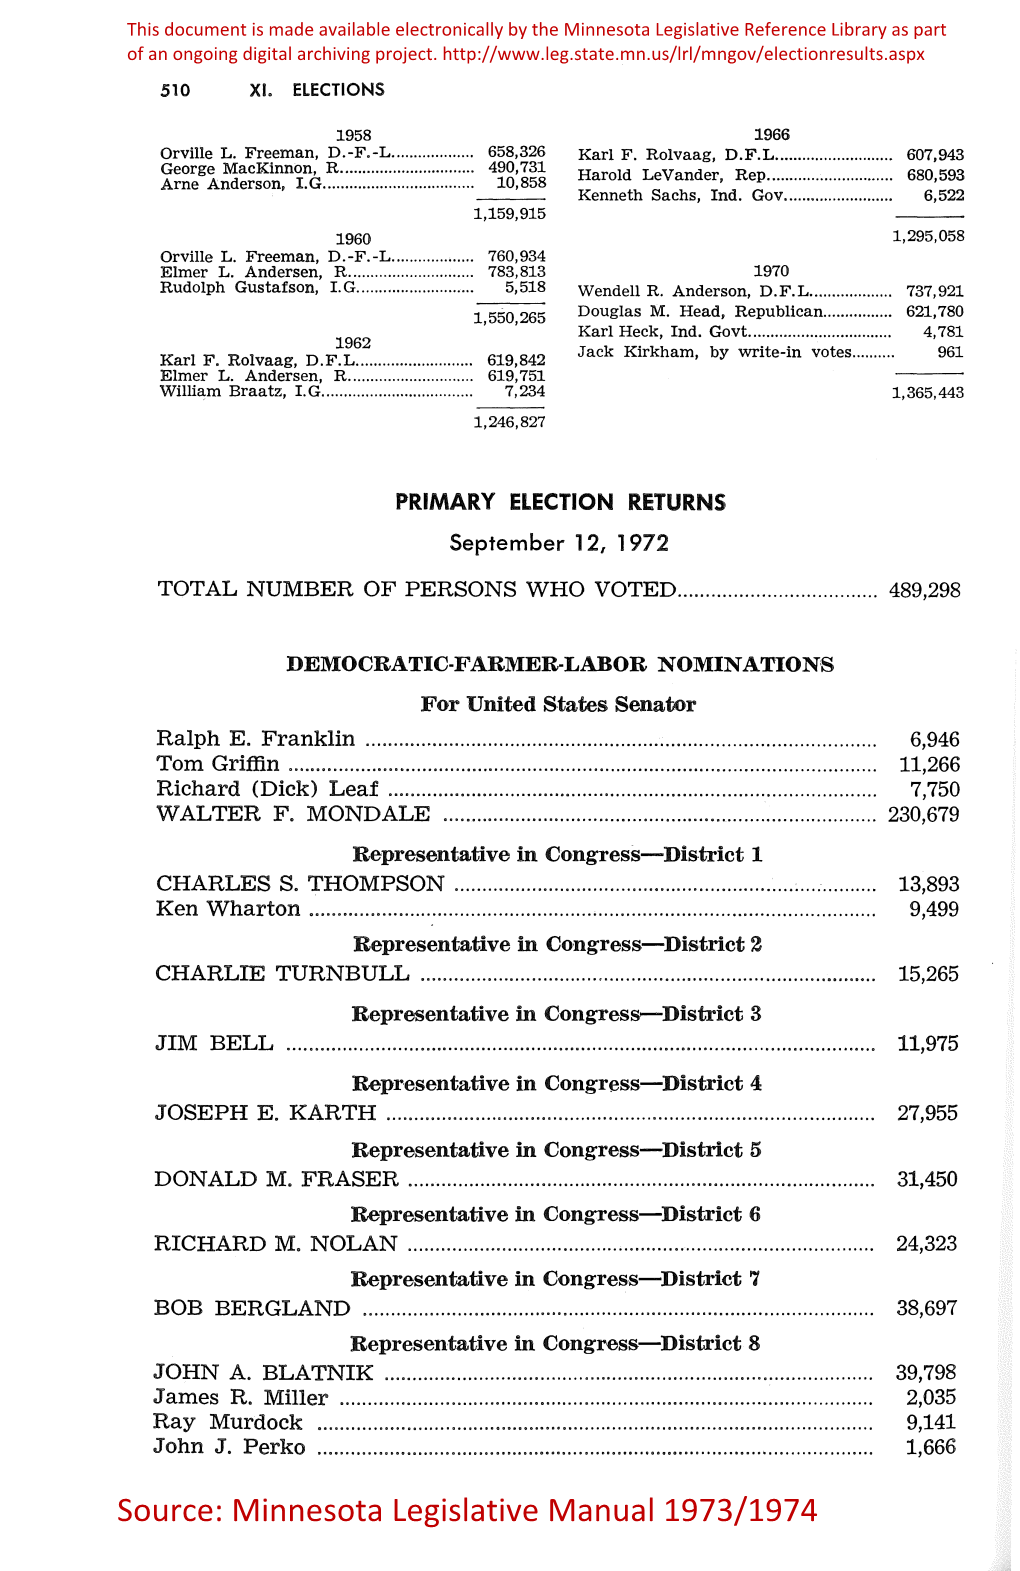 Minnesota Legislative Manual 1973/1974 1972 PRIMARY Election 511